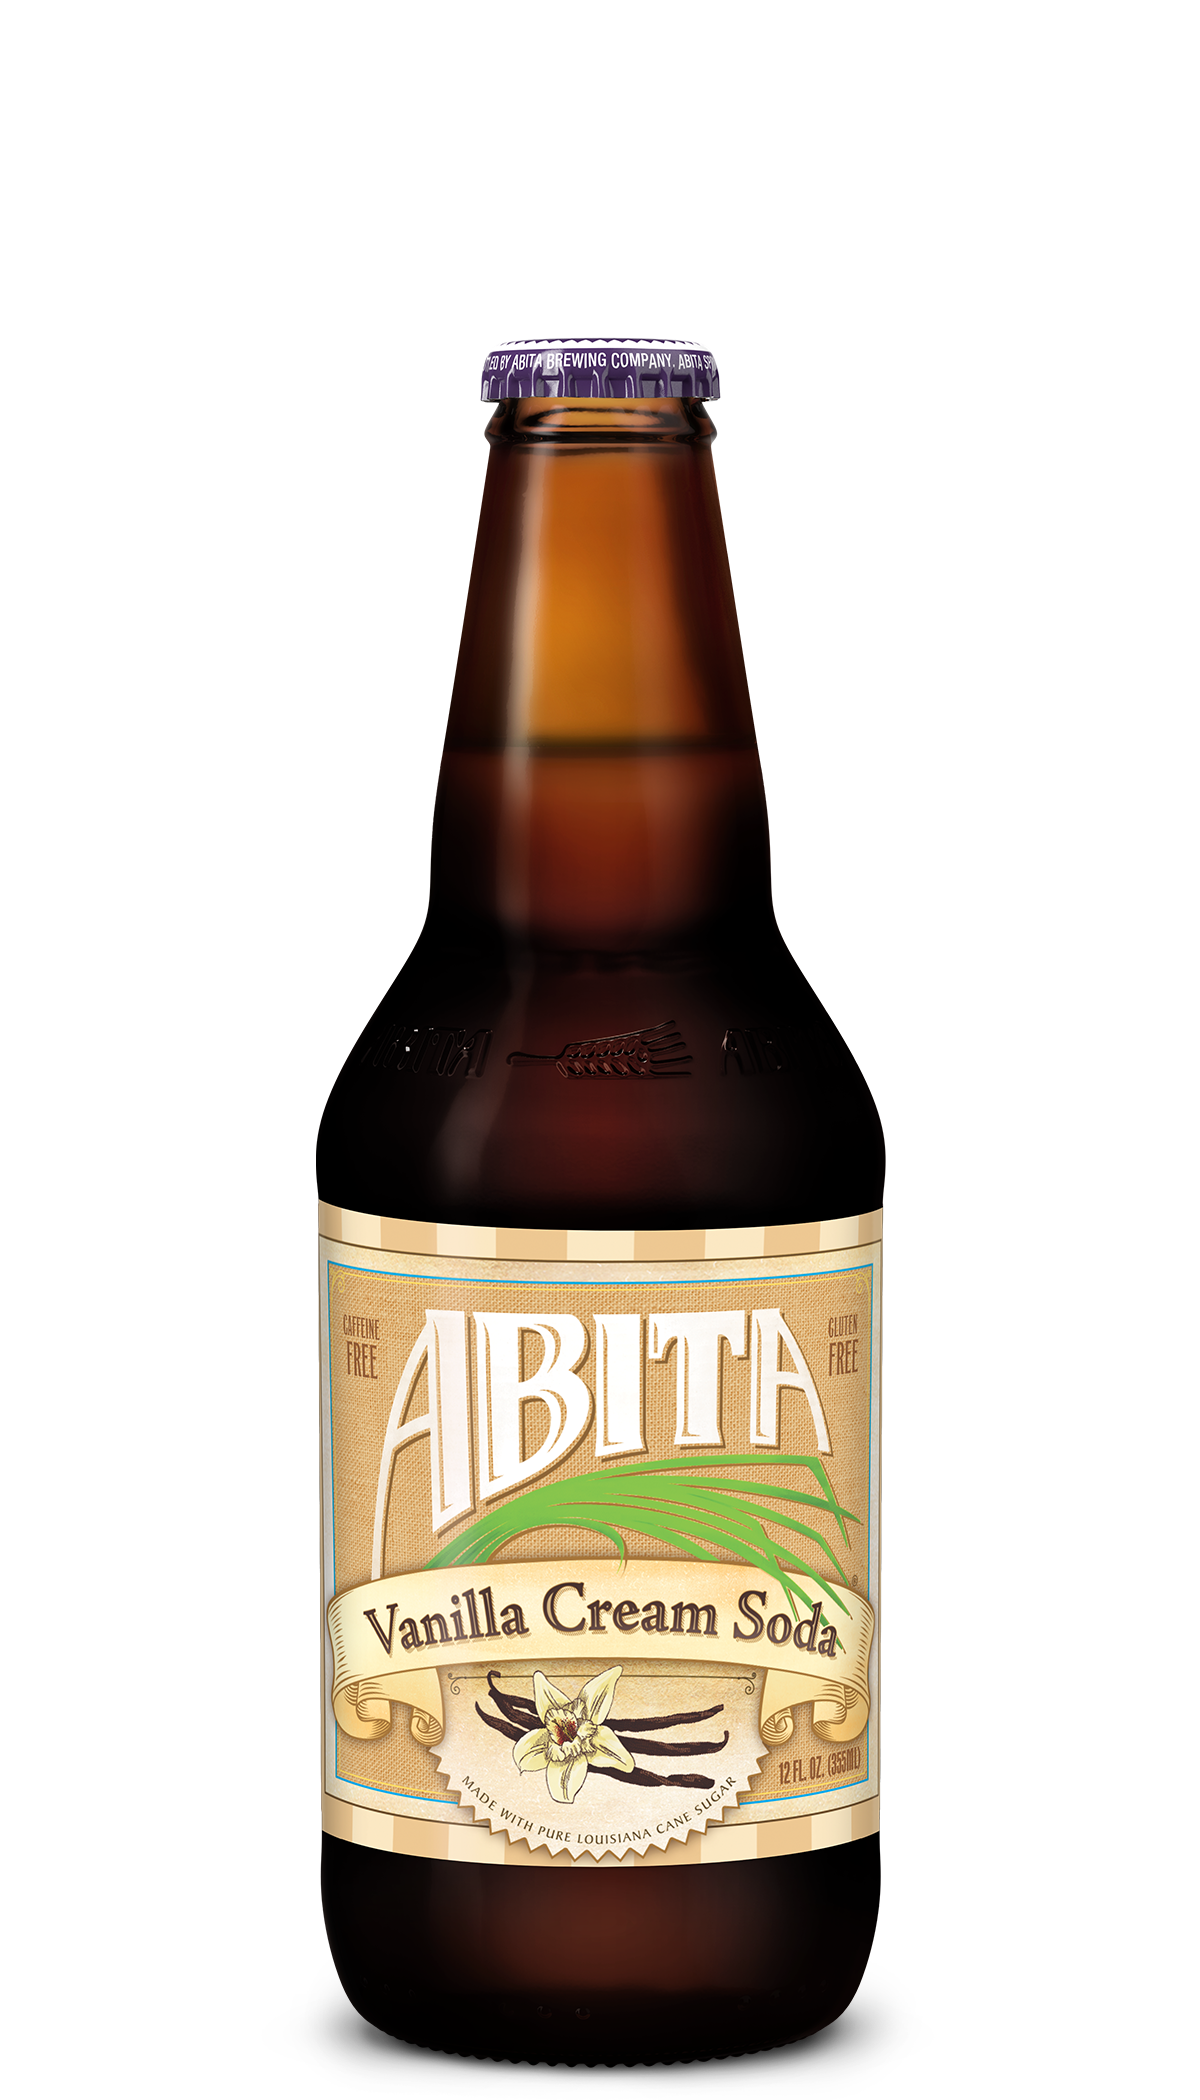 Bottle of Year Round offering, Vanilla Cream Soda from Abita Brewing Company.